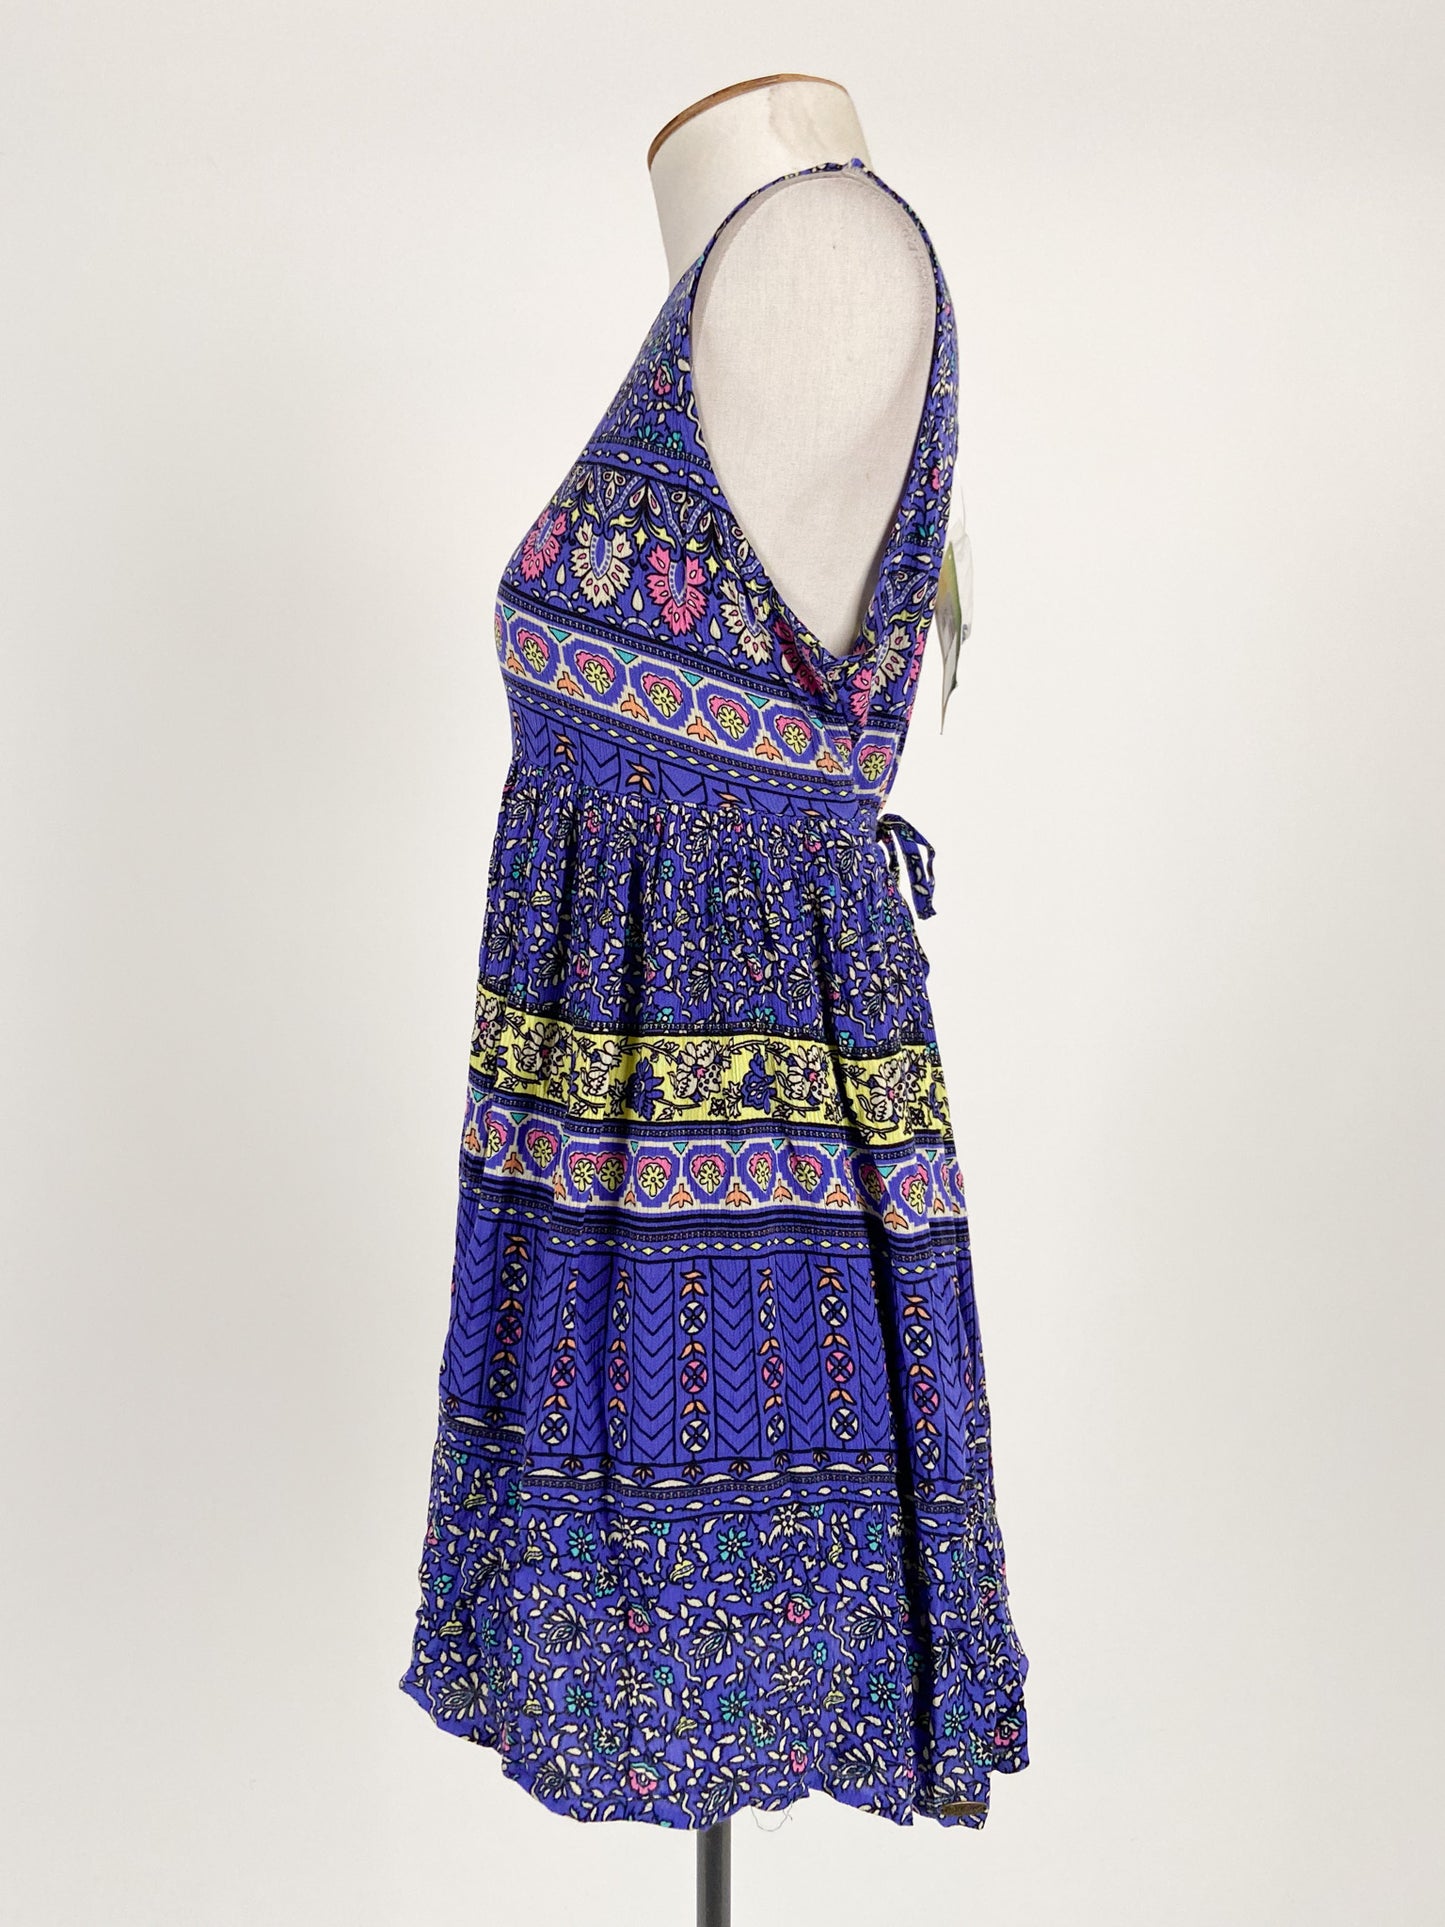 Rip Curl | Multicoloured Casual Dress | Size 12